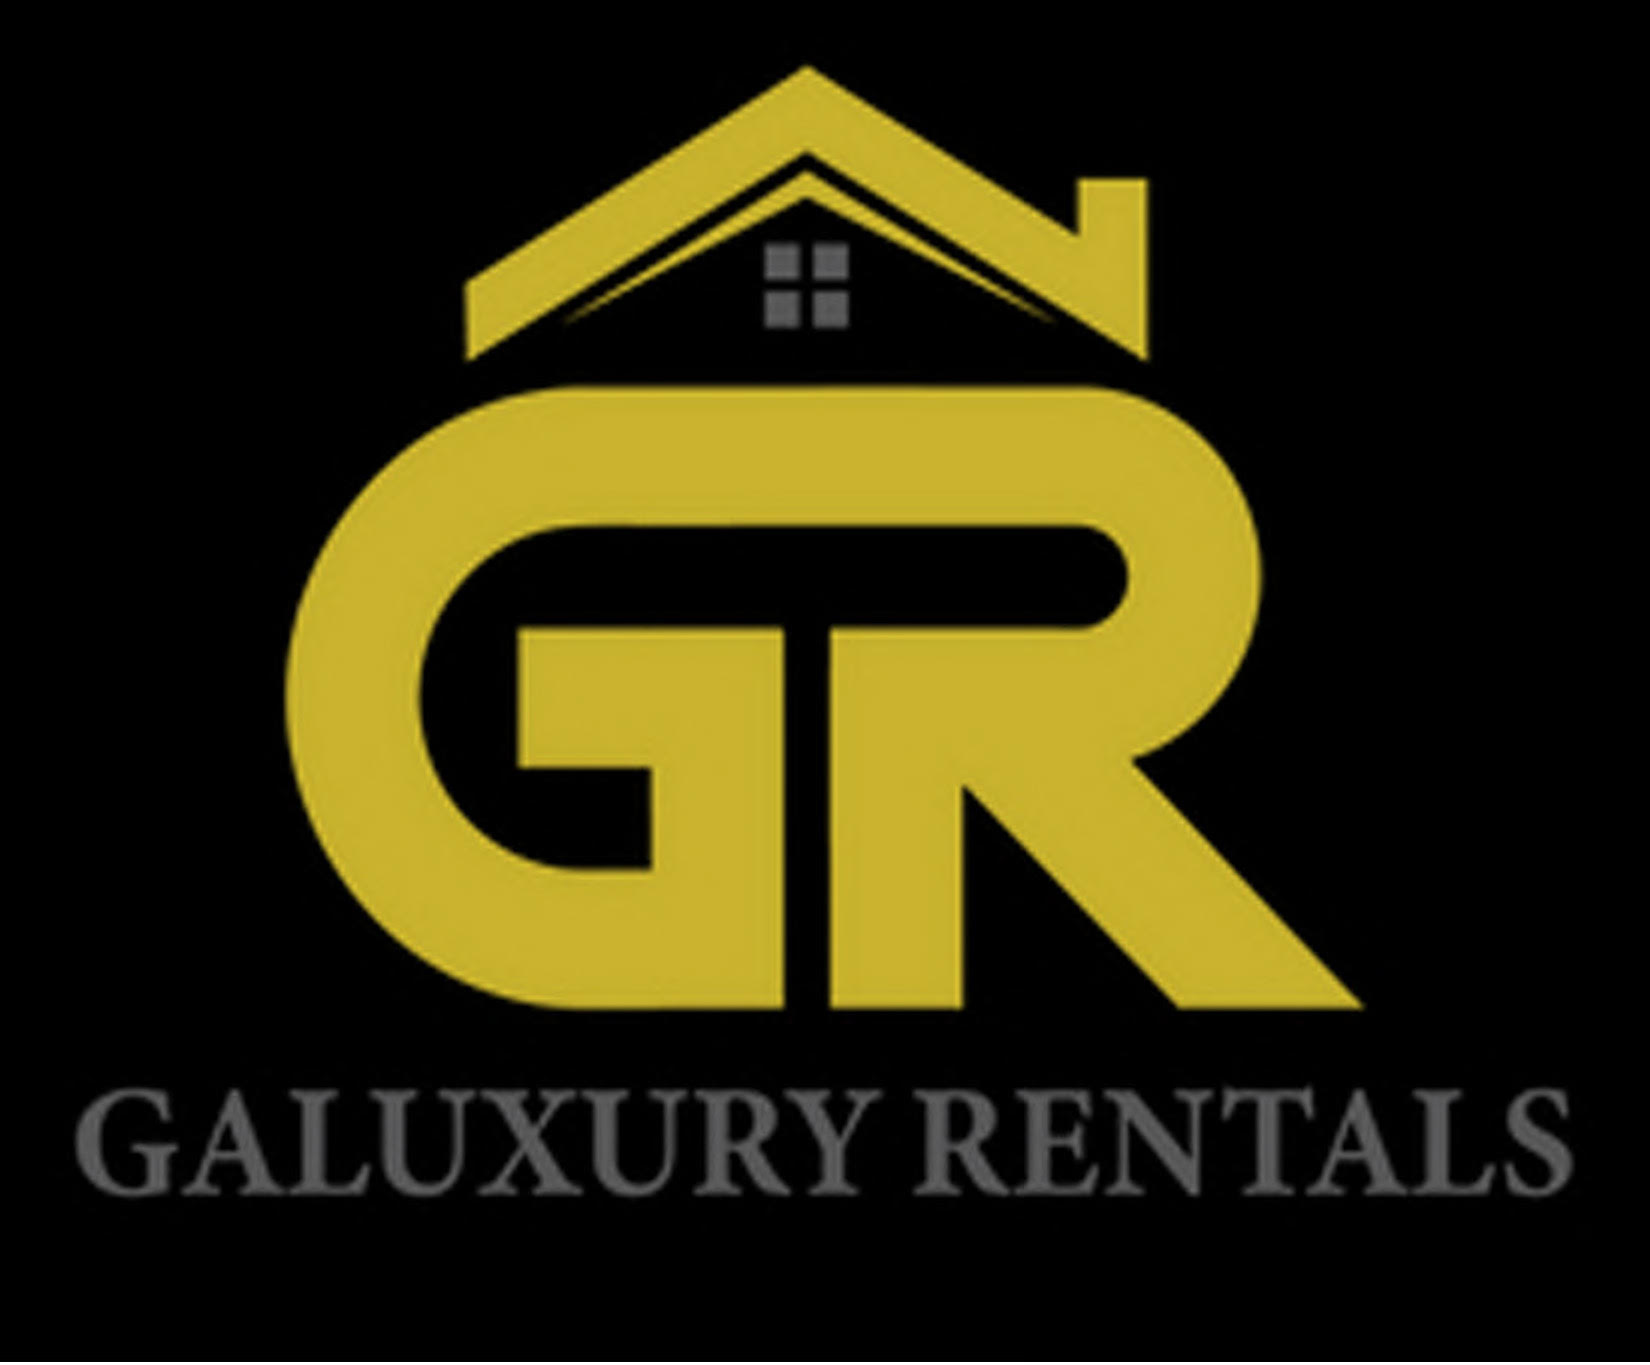 GA Luxury Rentals - Vacation Rental Properties in and around Atlanta Georgia, Louisville Kentucky, and Jacksonville Florida!